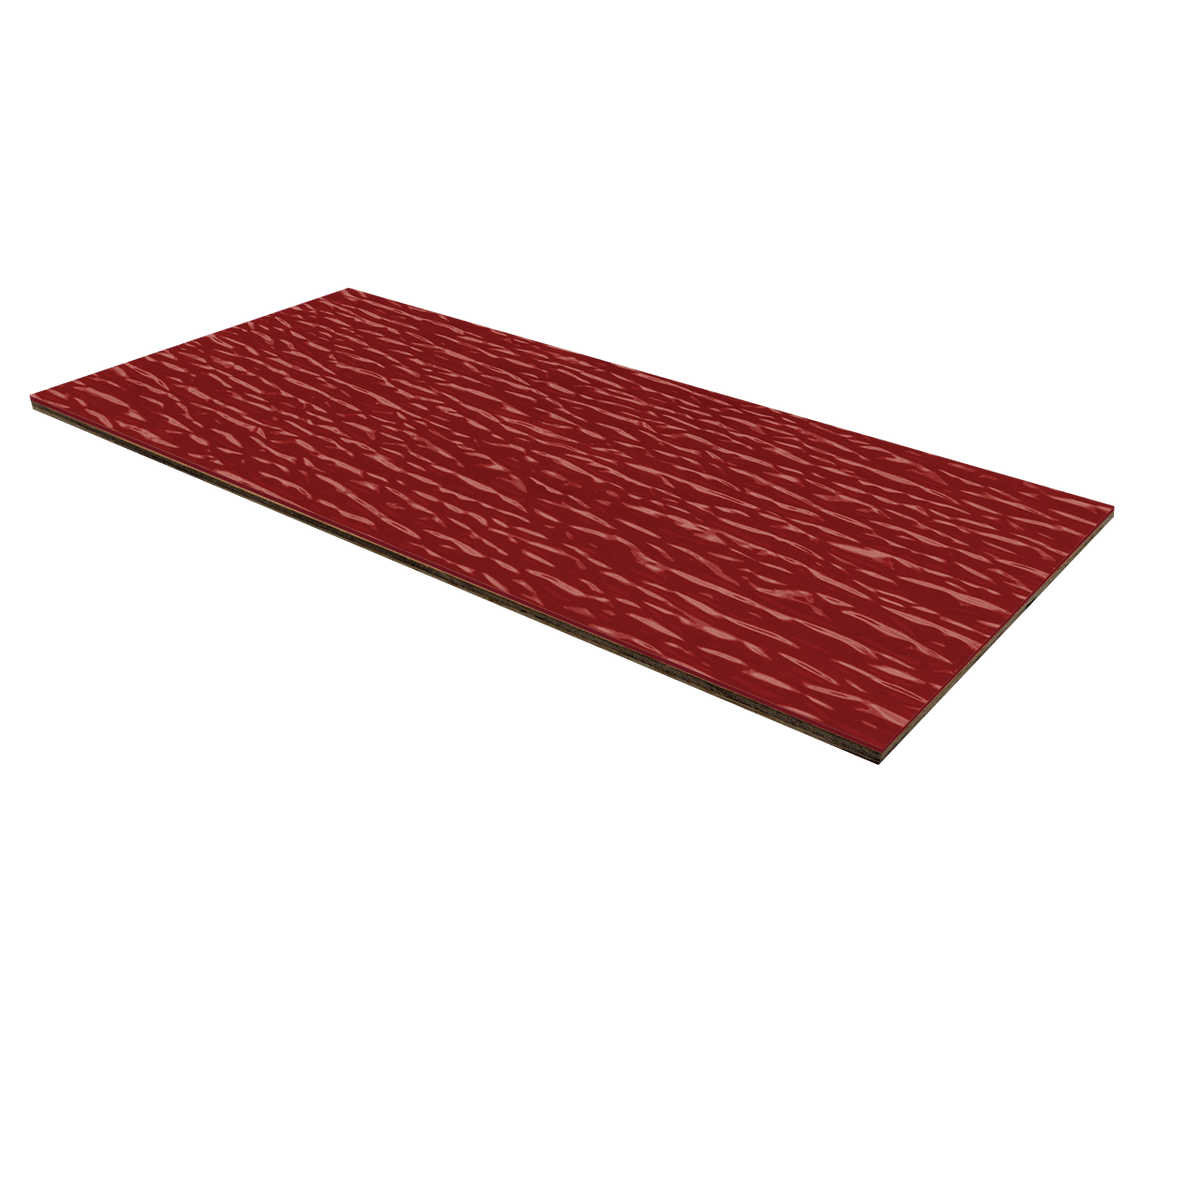 1/8" Textured Fiberglass Laminate - Red